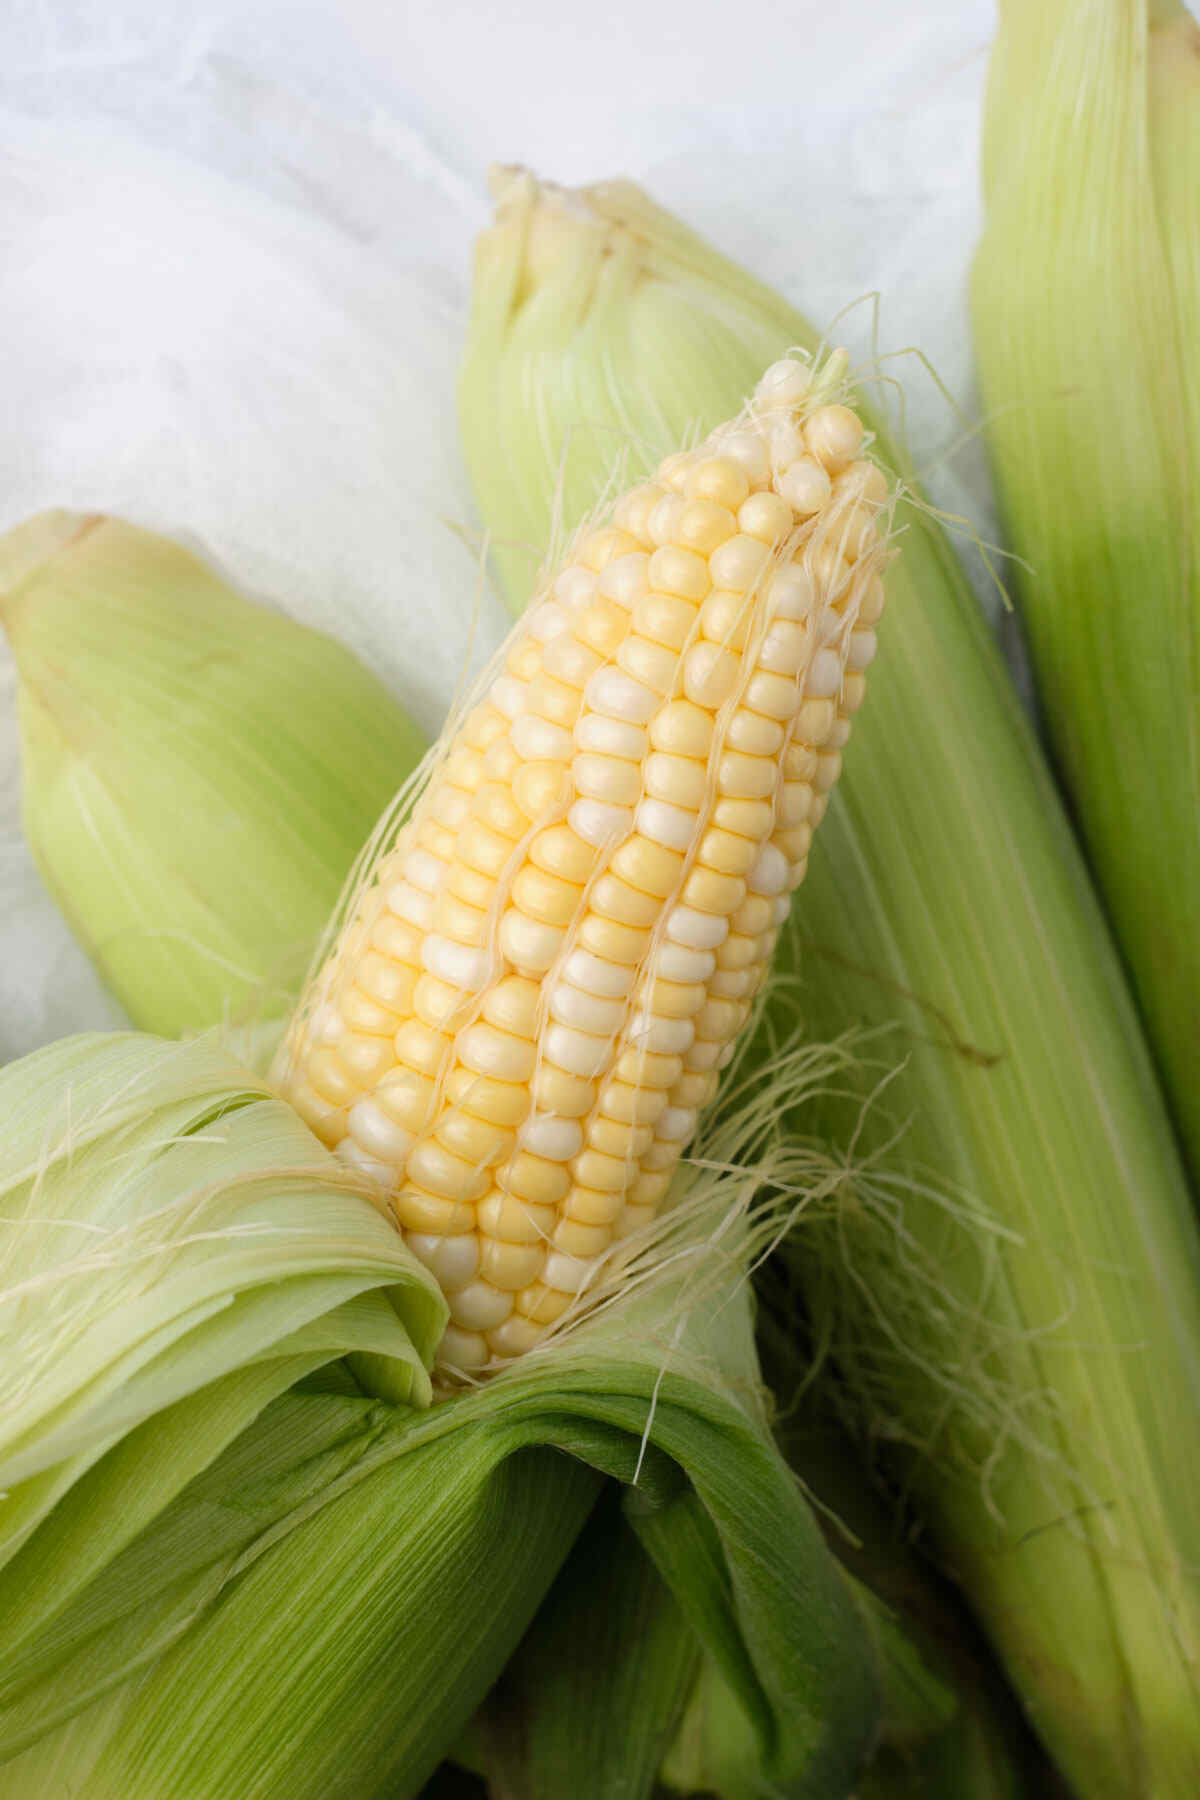 a single ear of corn with the husk peeled back.